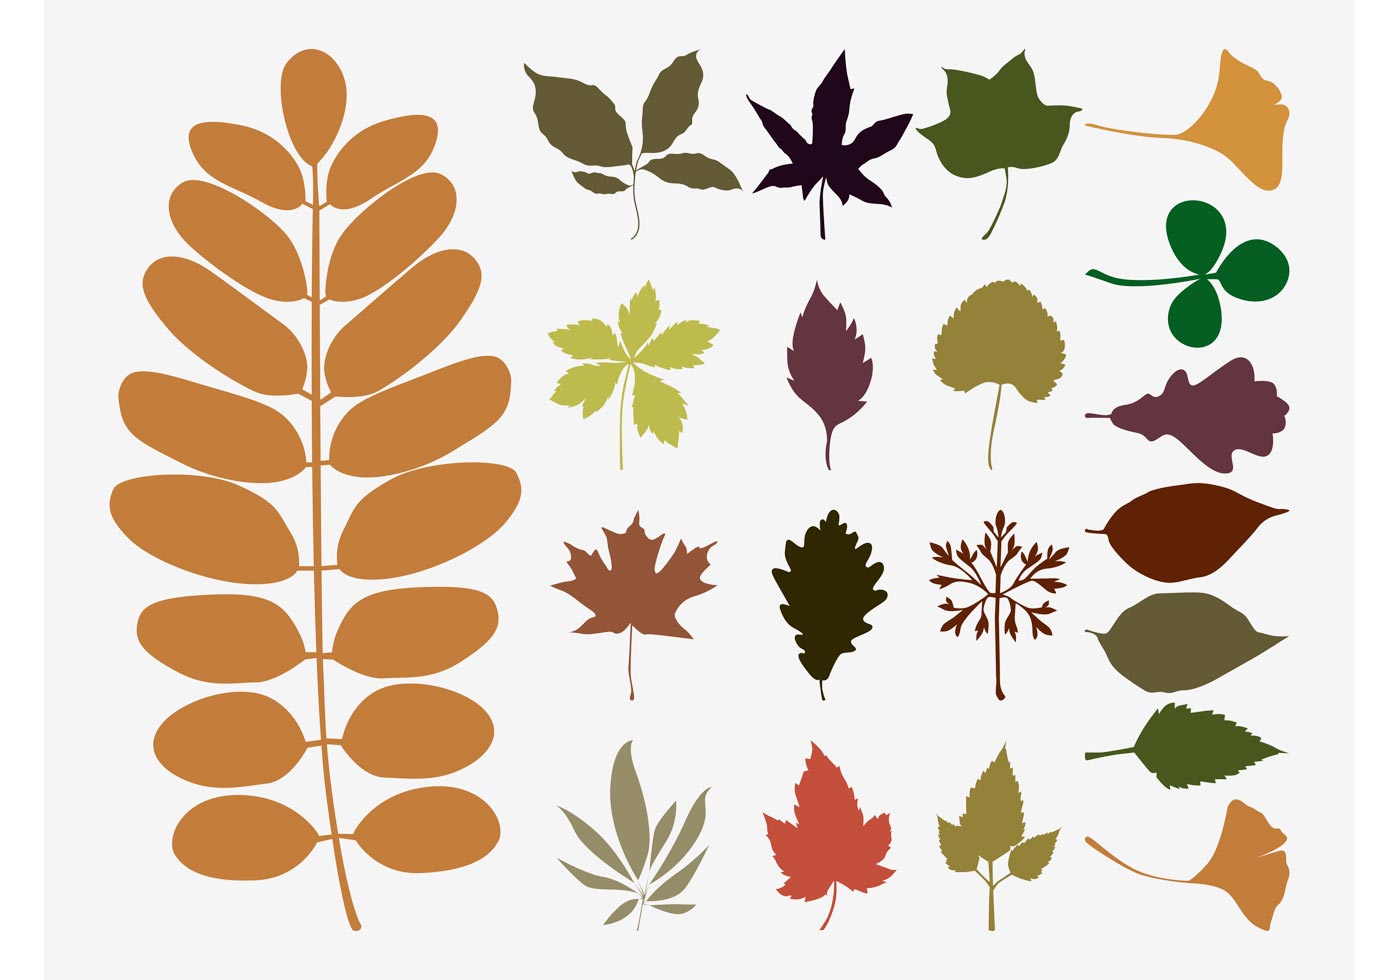 Fall Leaves Vectors - Download Free Vector Art, Stock ...